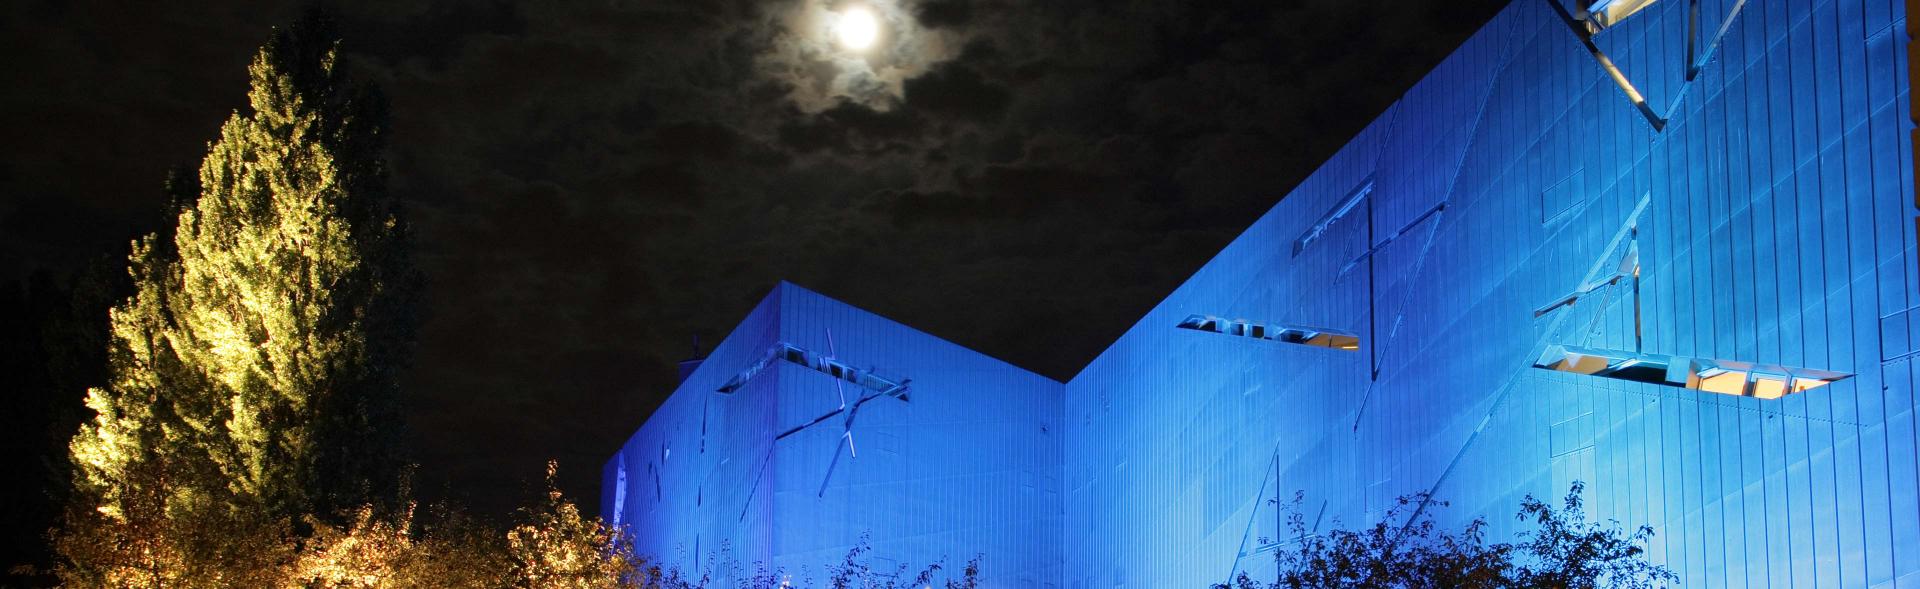 Libeskind-Bau blau angestrahlt, nachts, bei Vollmond